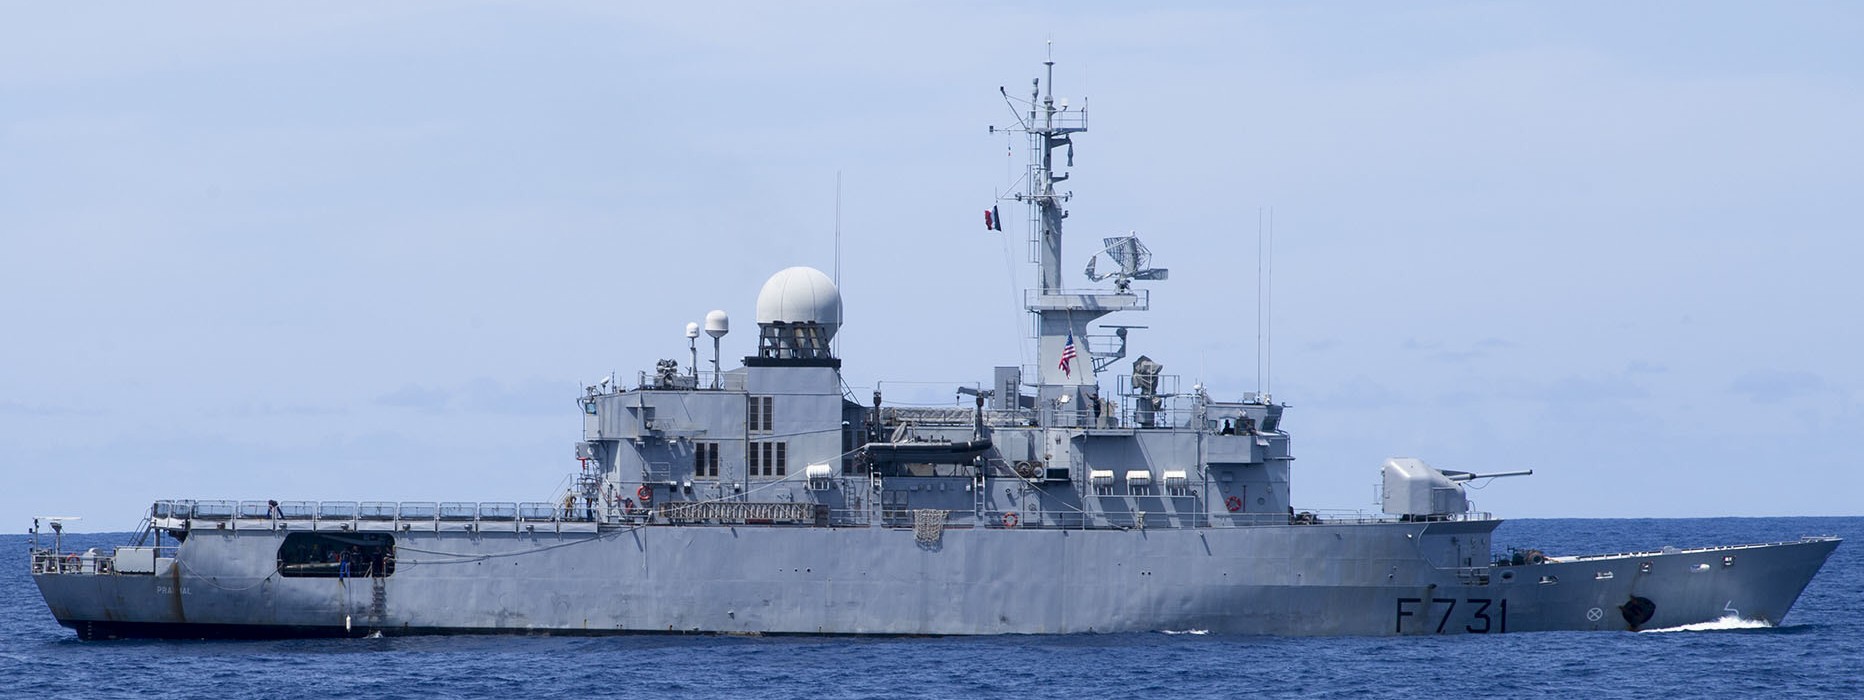 f-731 fs prairial floreal class frigate french navy marine nationale fregate surveillance 28